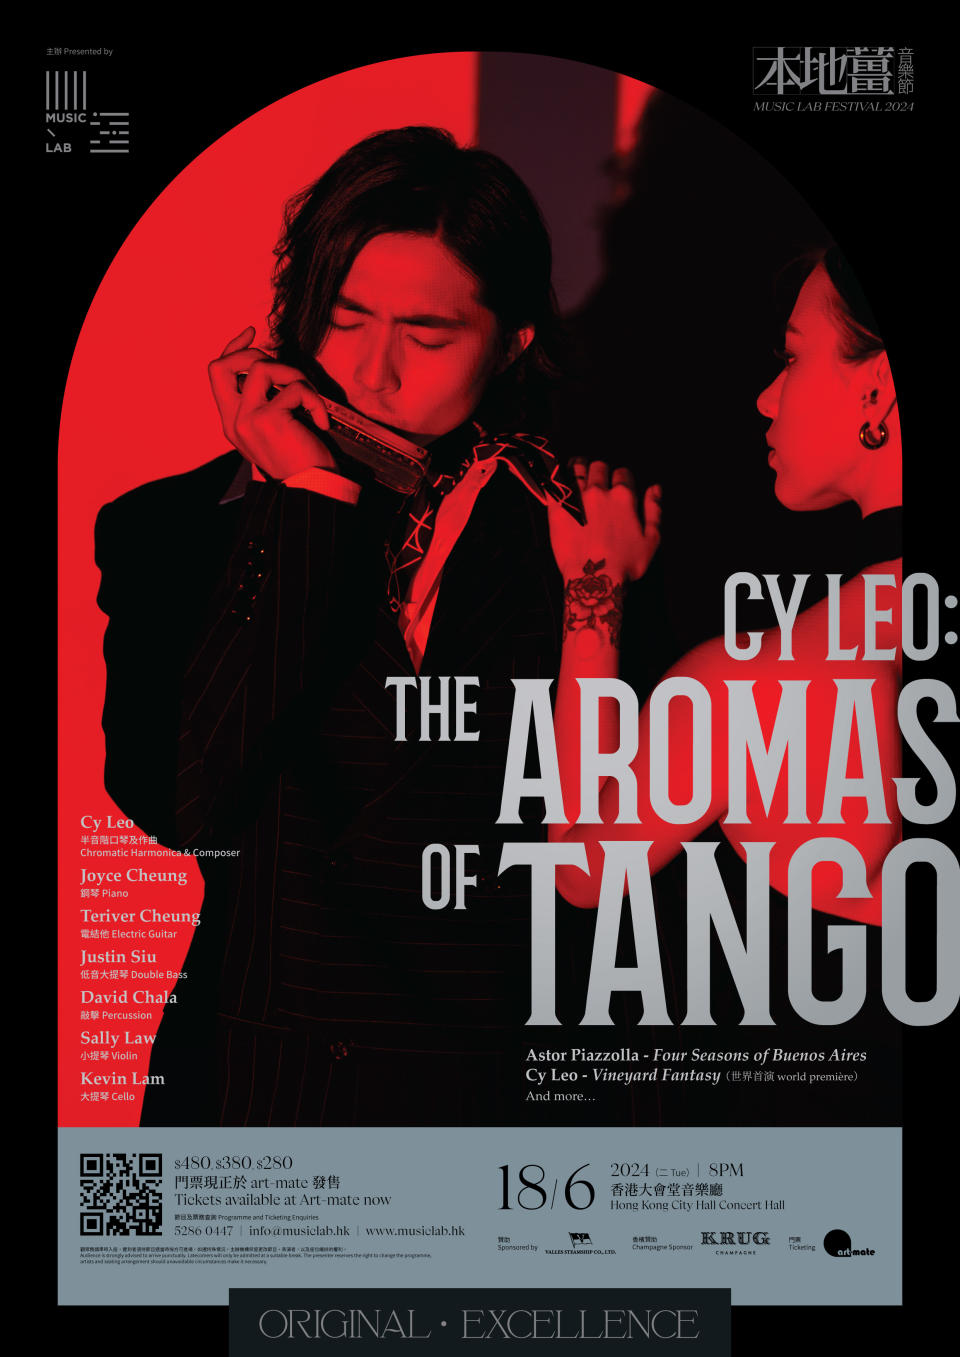 Cy Leo: The Aromas of Tango